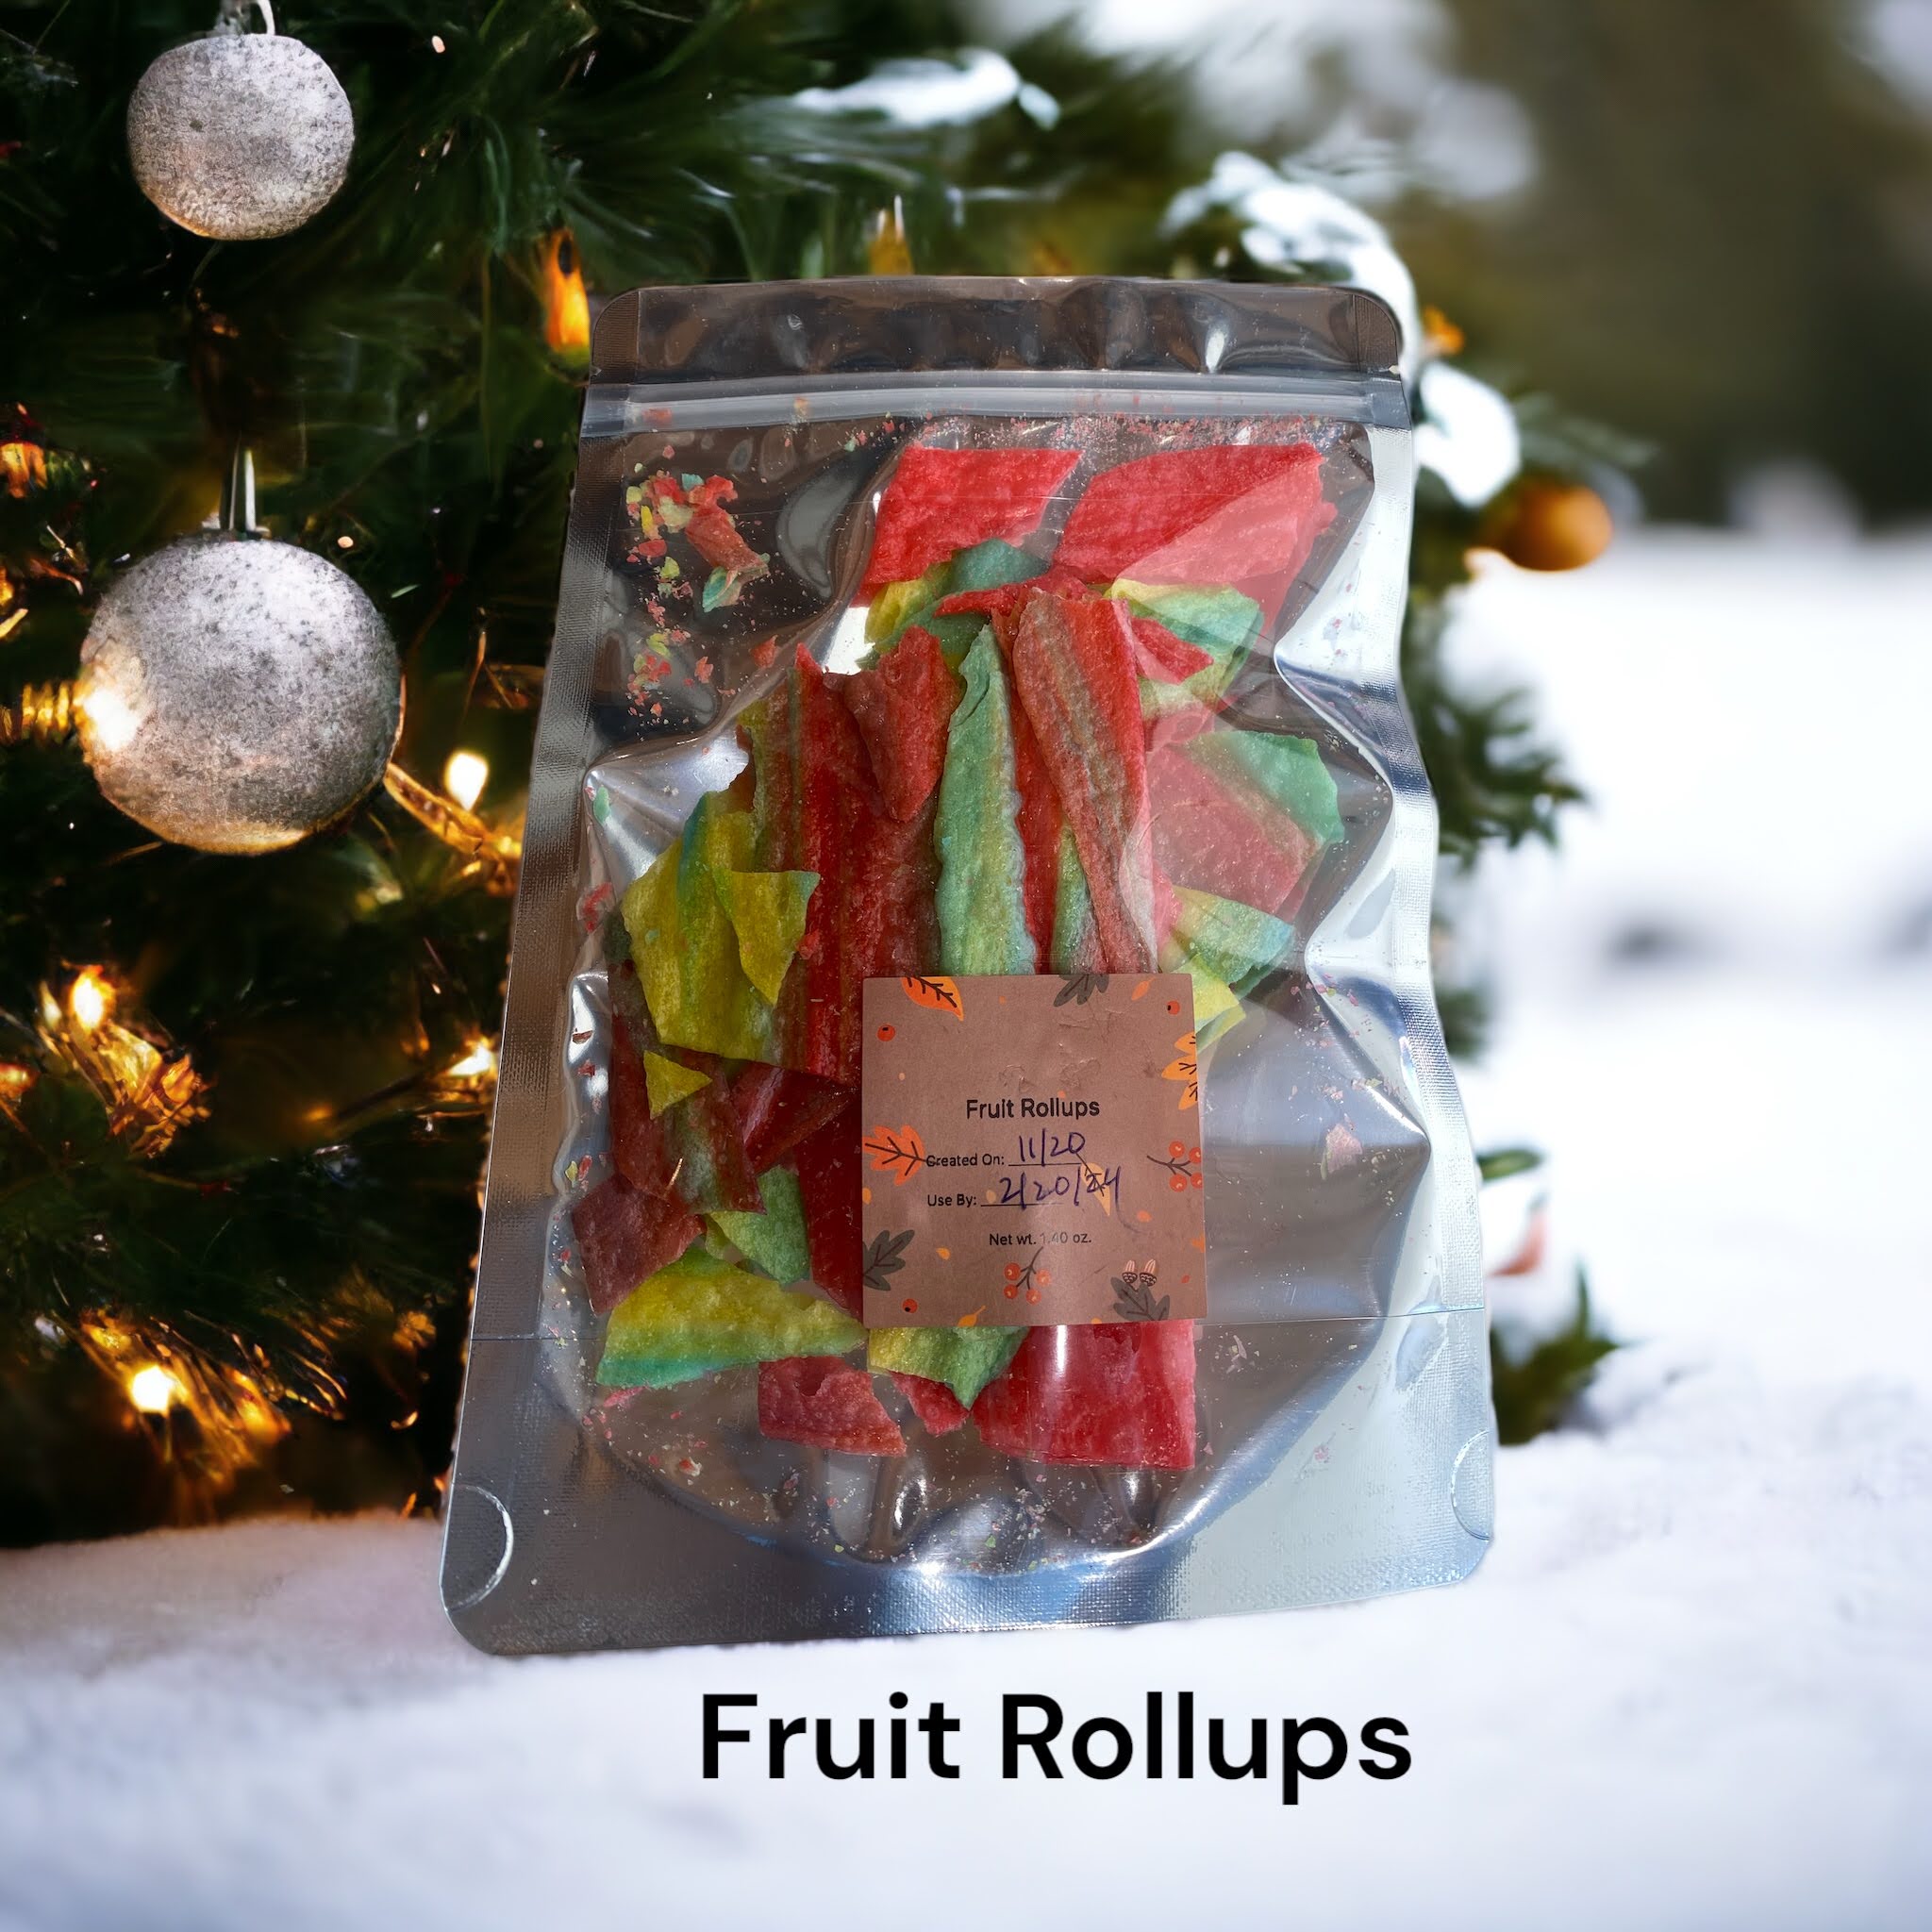 Fruit Rollups